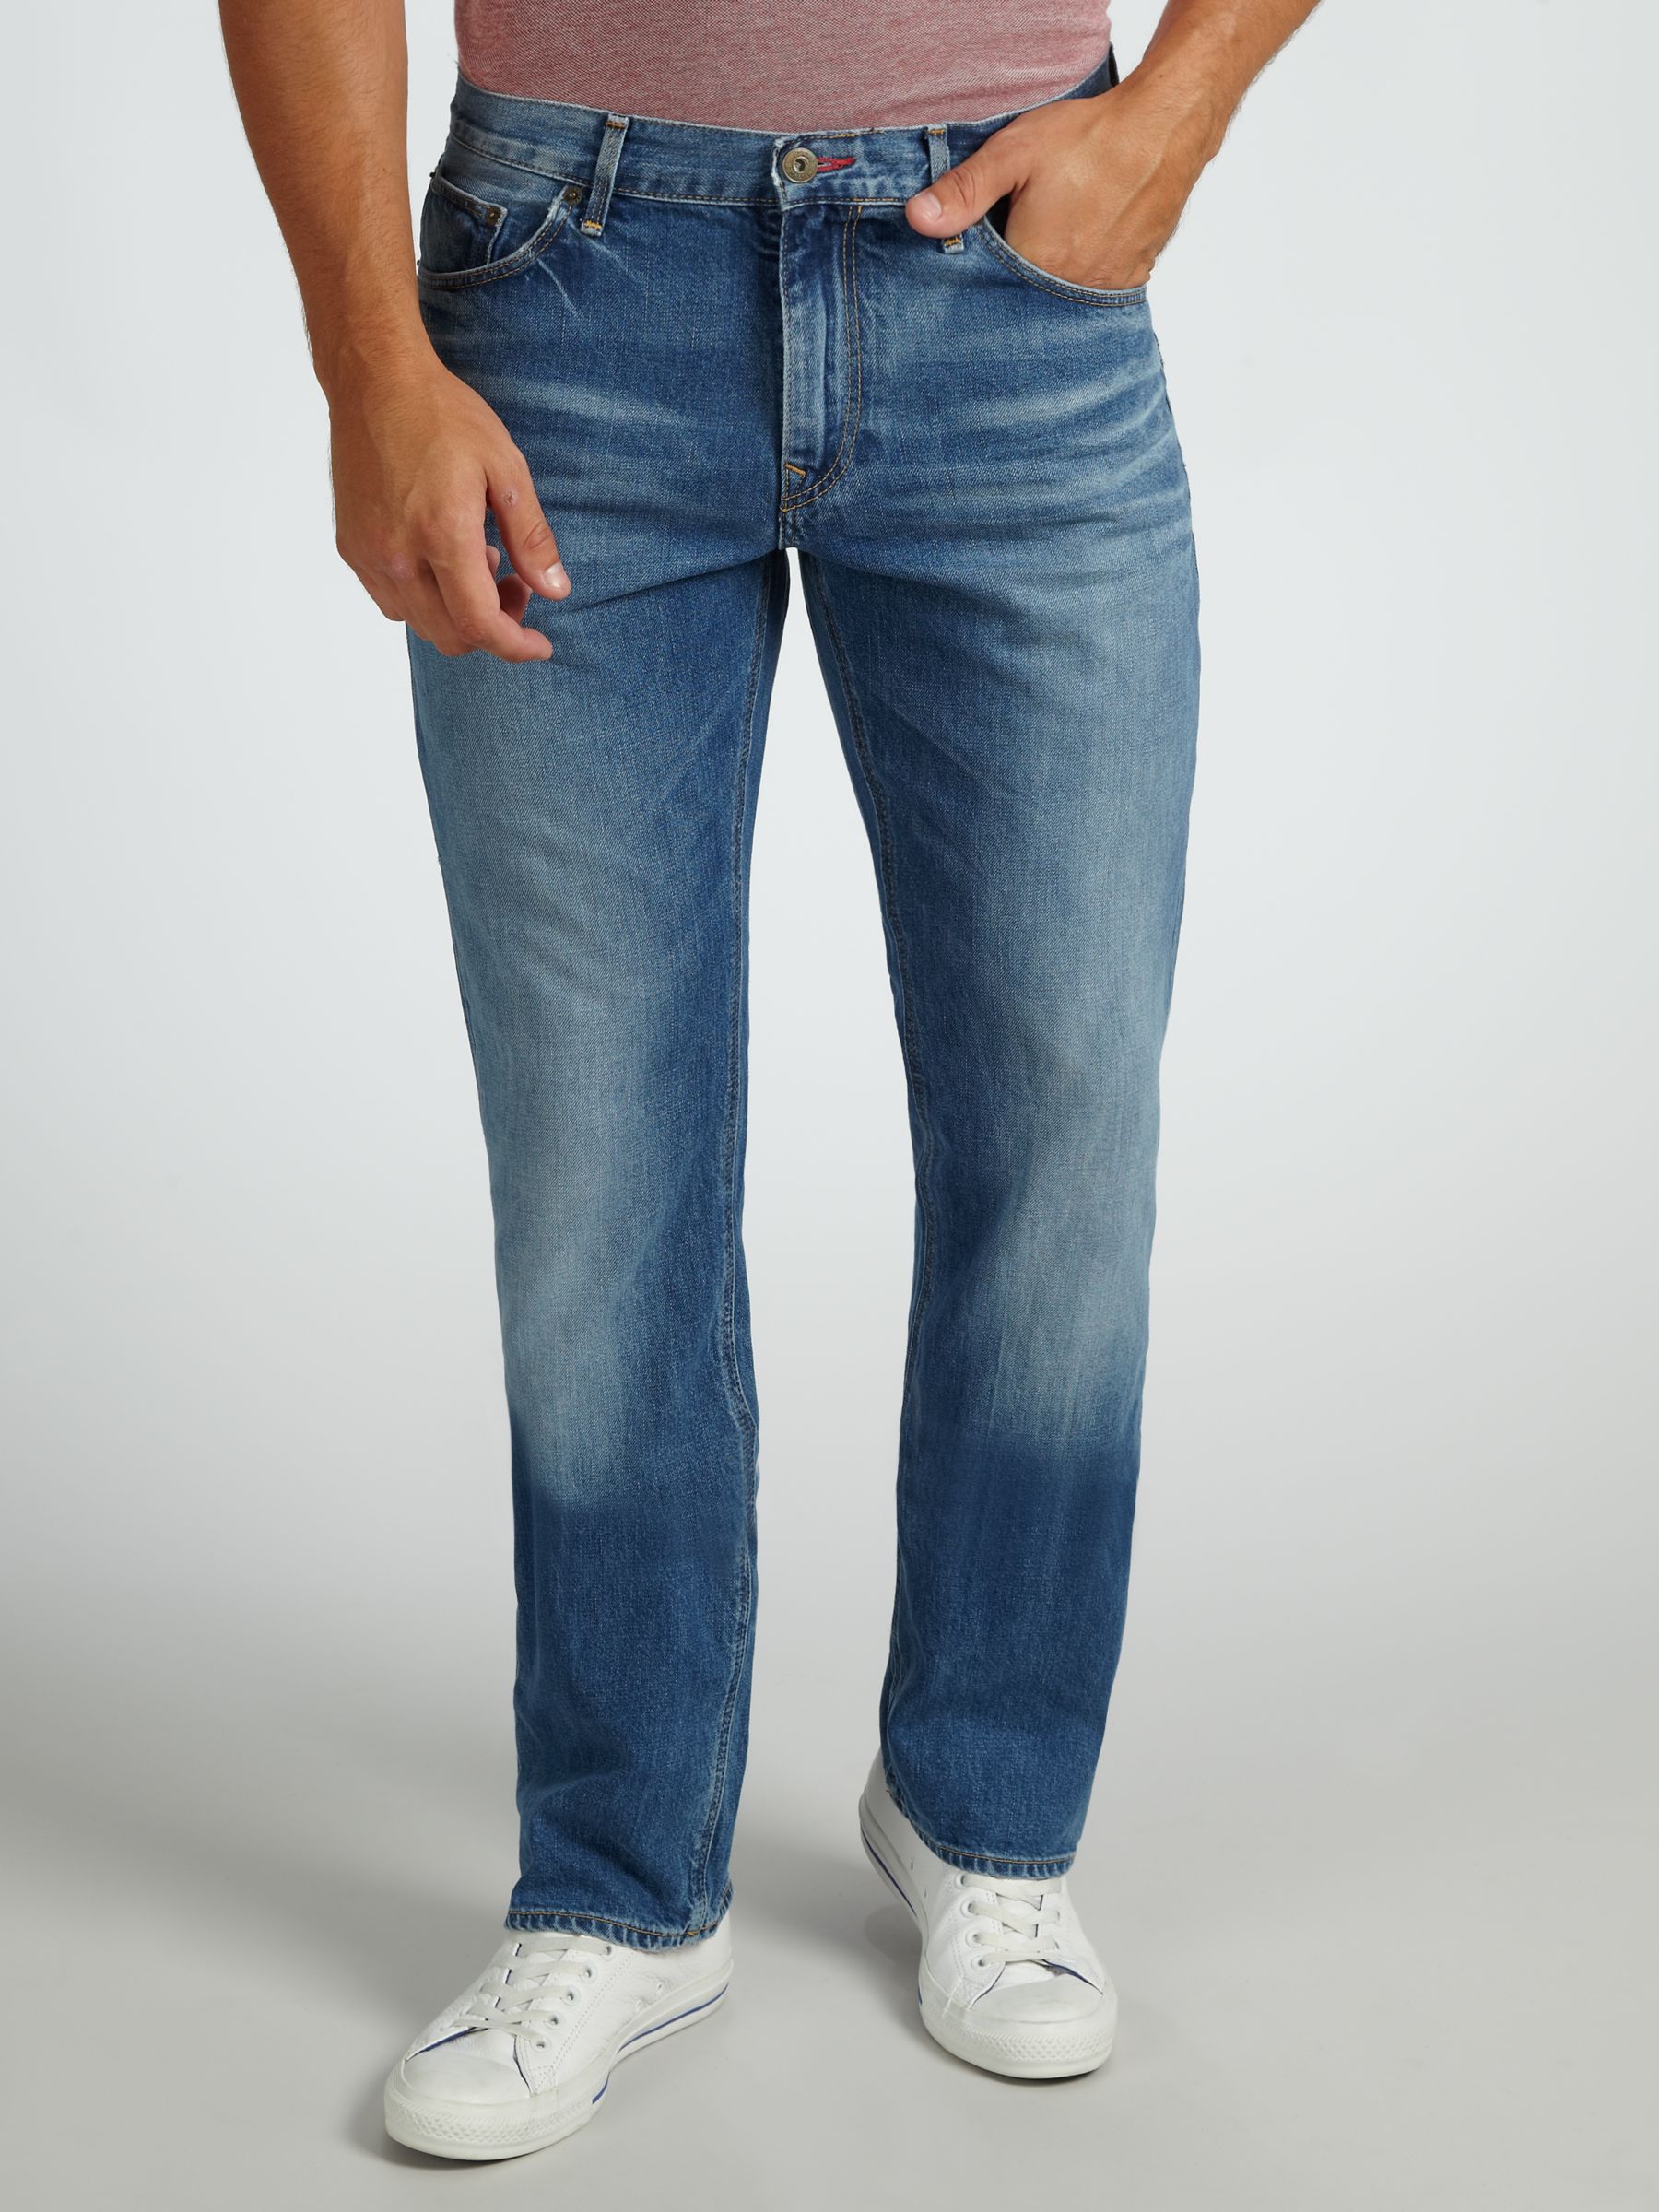 Buy Levi's 511 Slim Fit Rock Cod Jeans, Flat Indigo | John Lewis